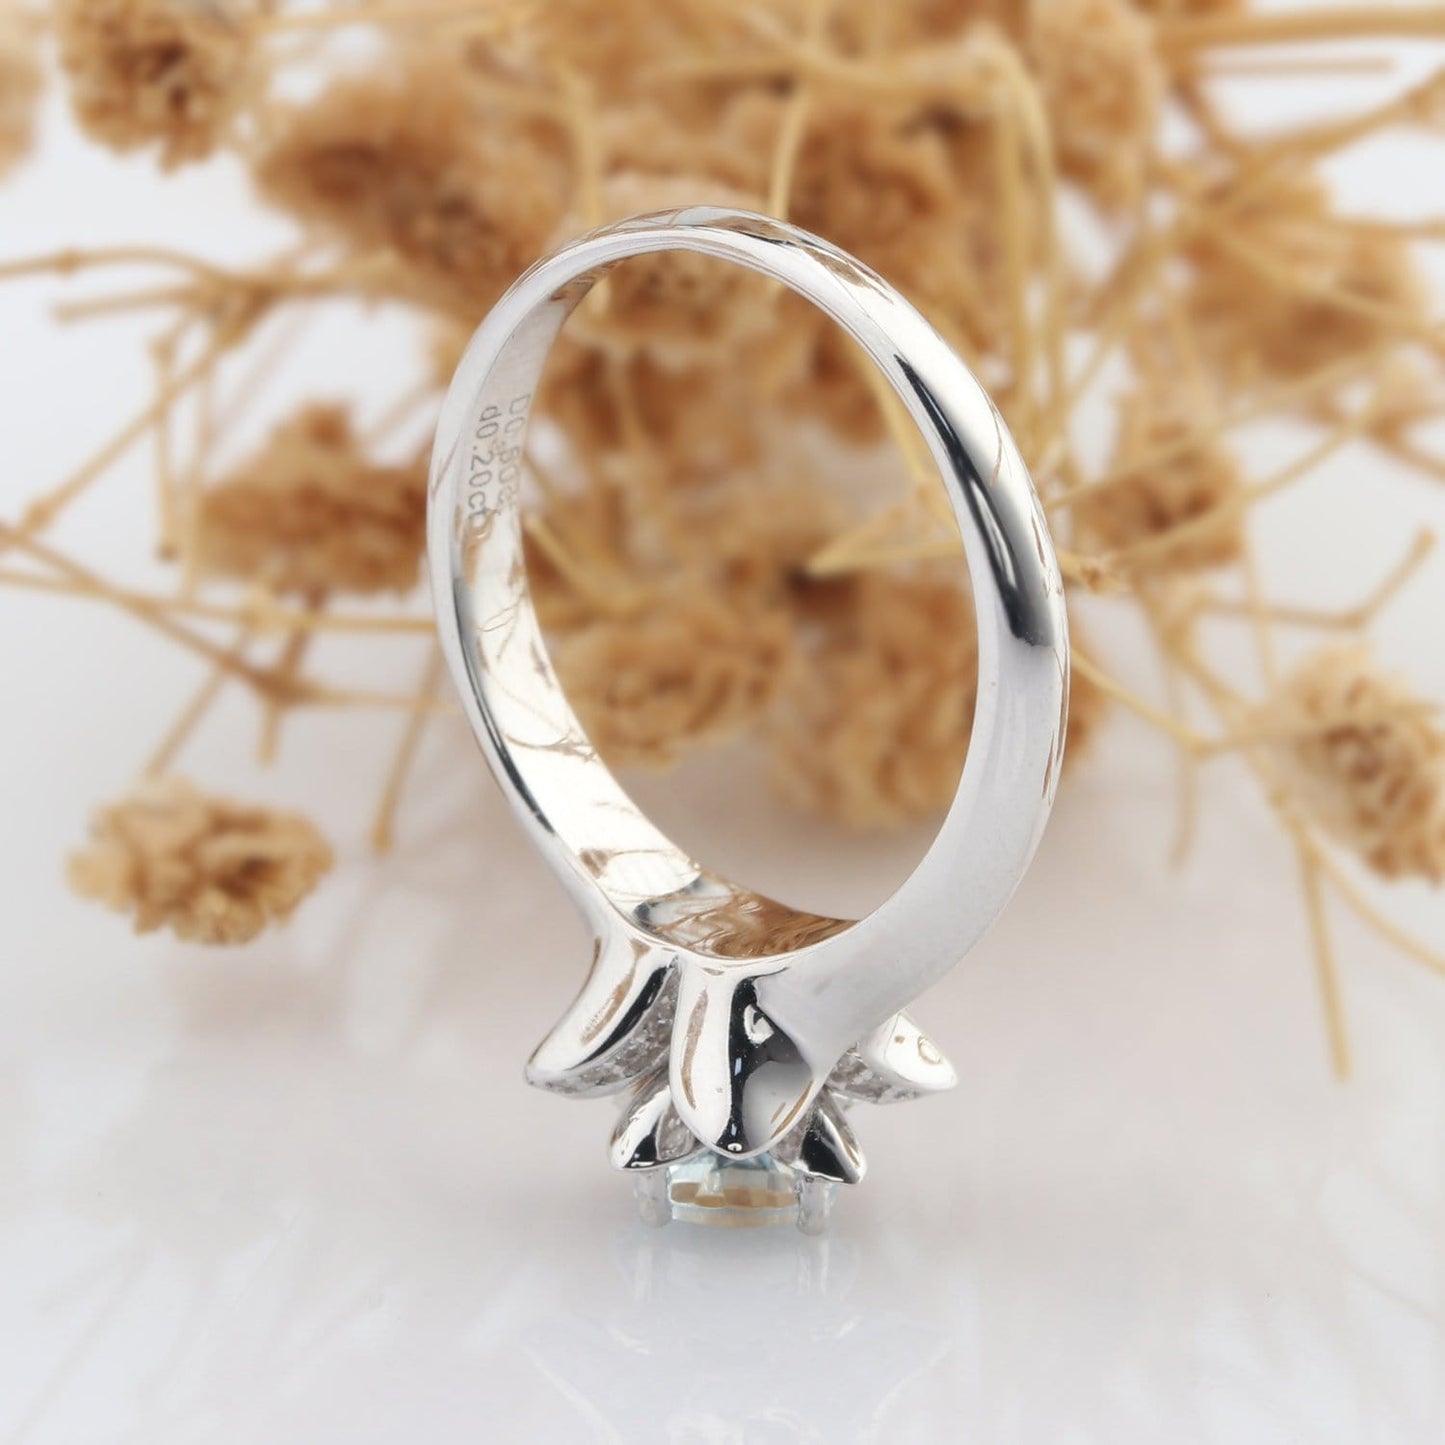 Lotus Design 5mm Natural Aquamarine 925 Sterling Silver Gemstone Engagement Ring